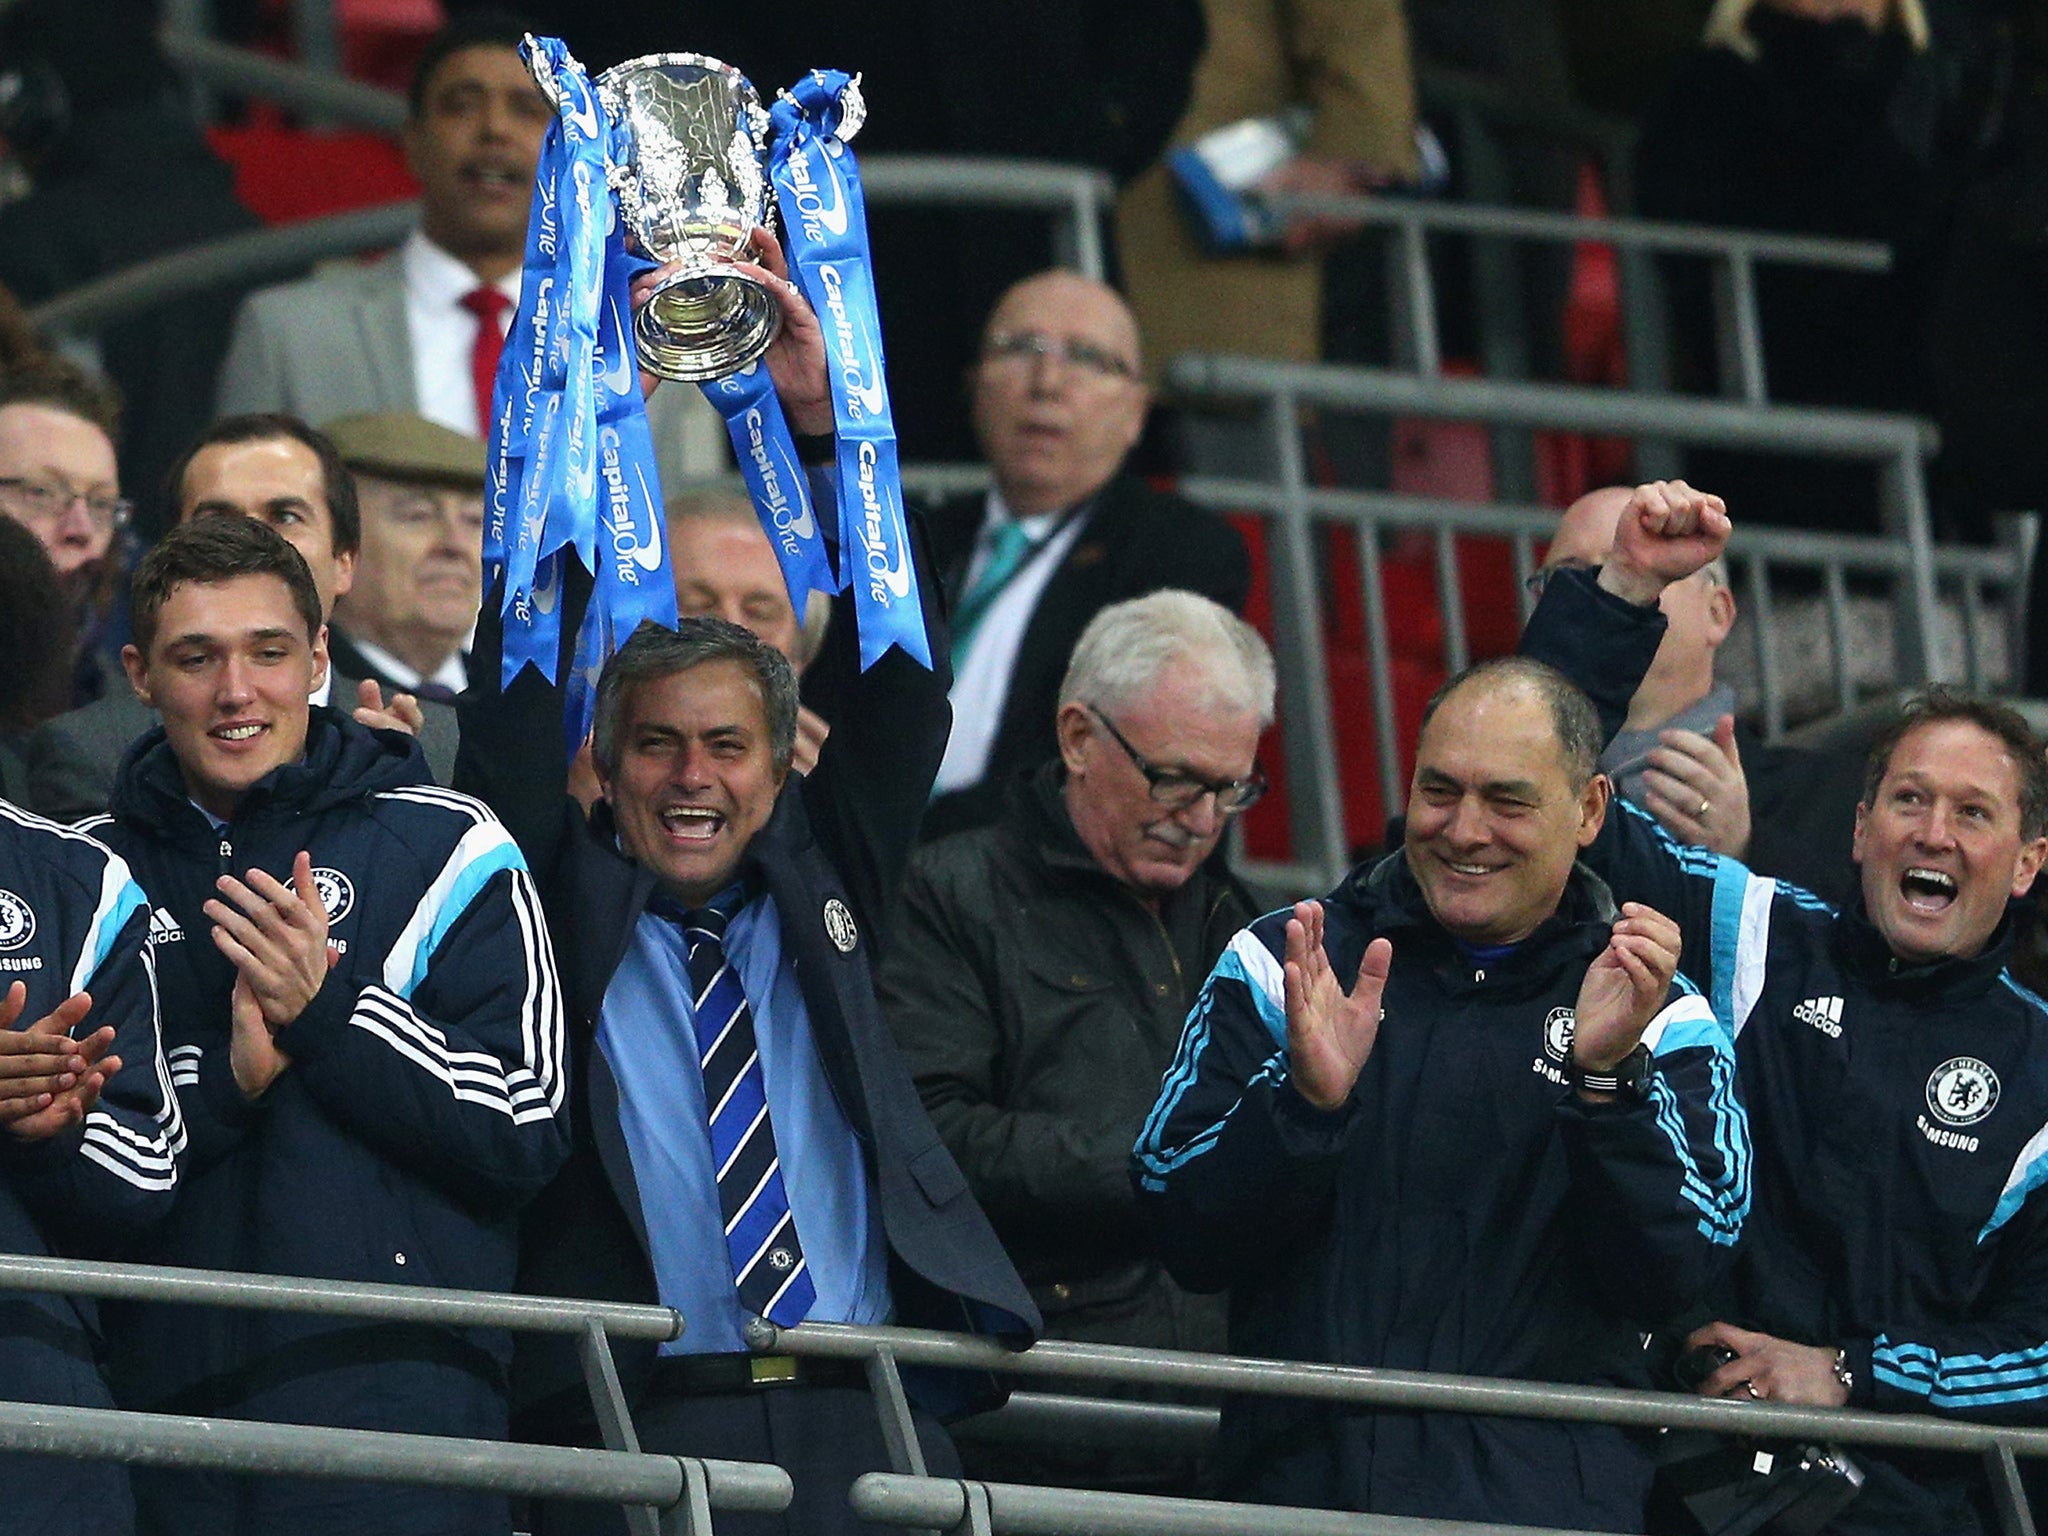 Mourinho lifting the trophy on Sunday